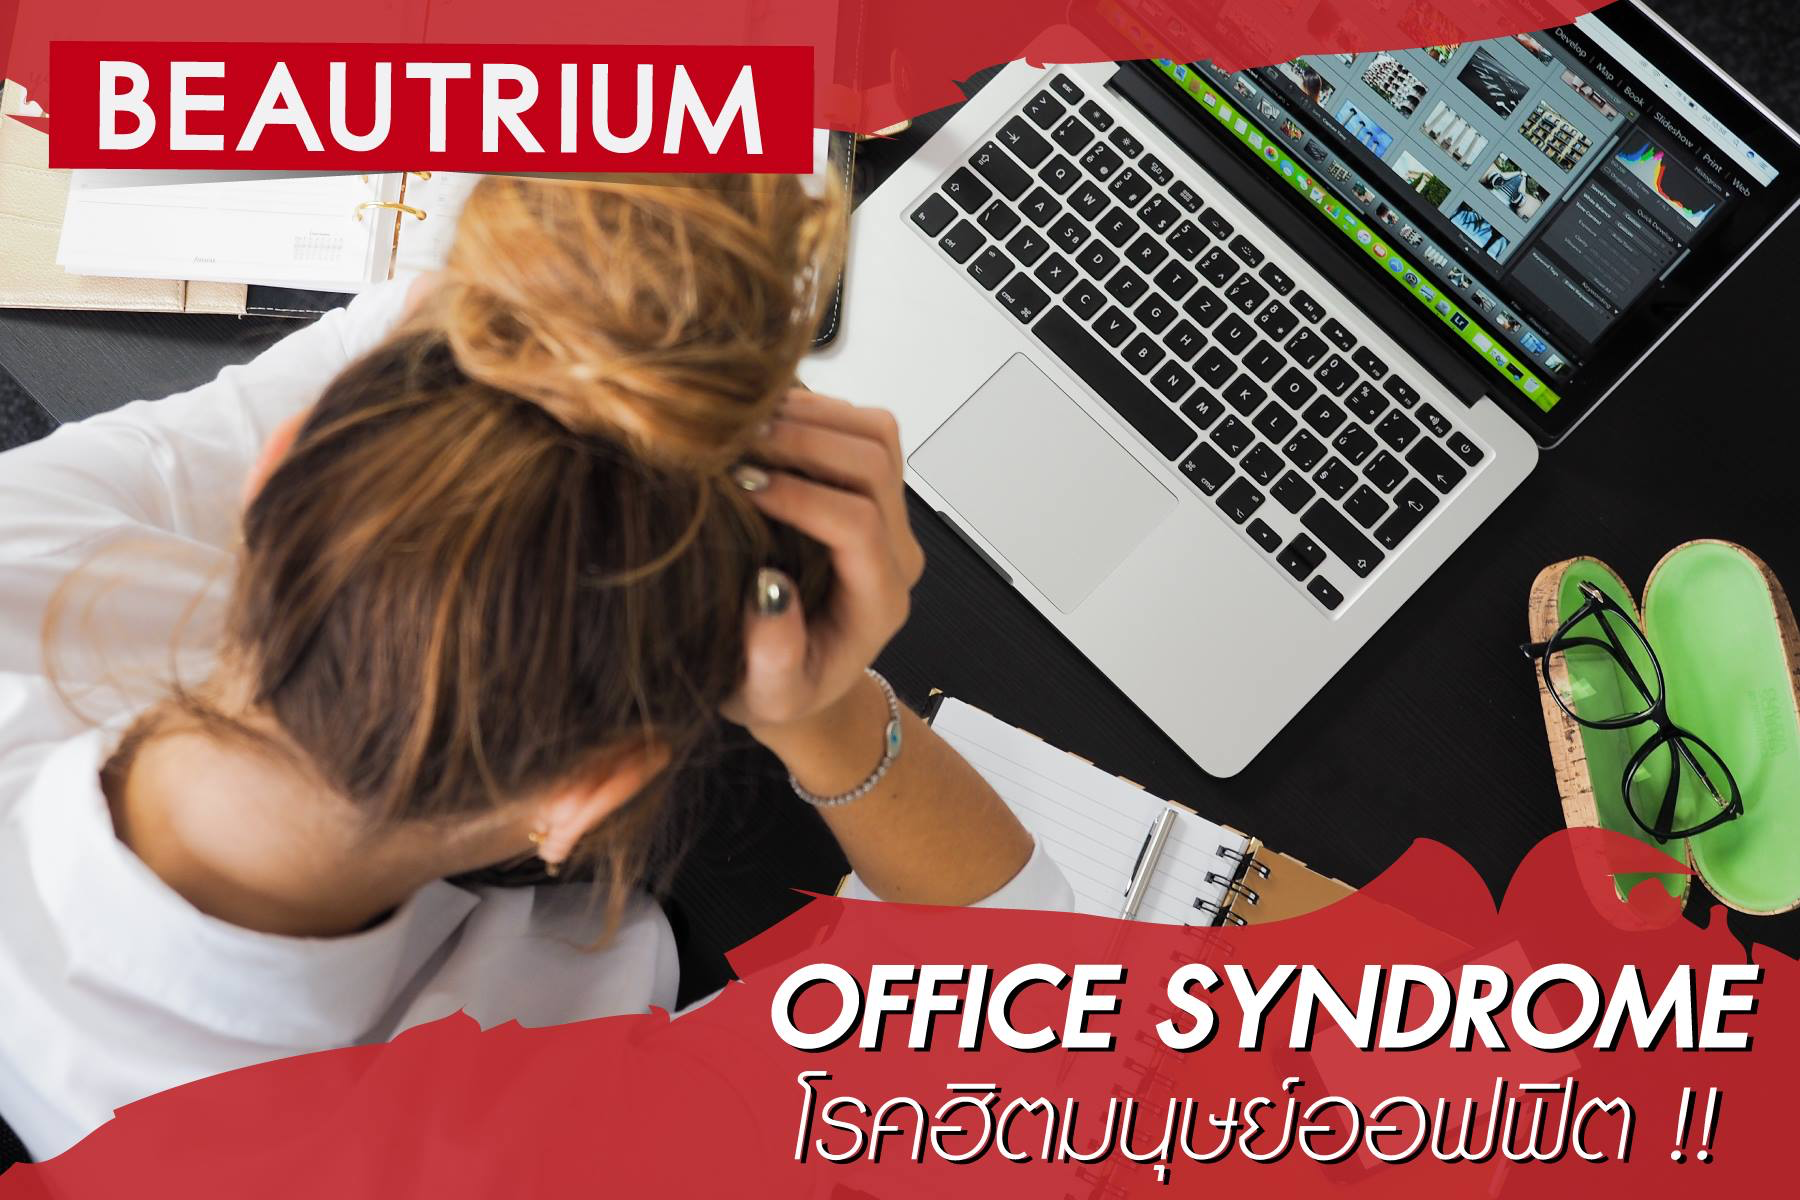 Office Syndrome โรคฮิตมนุษย์ออฟฟิศ!